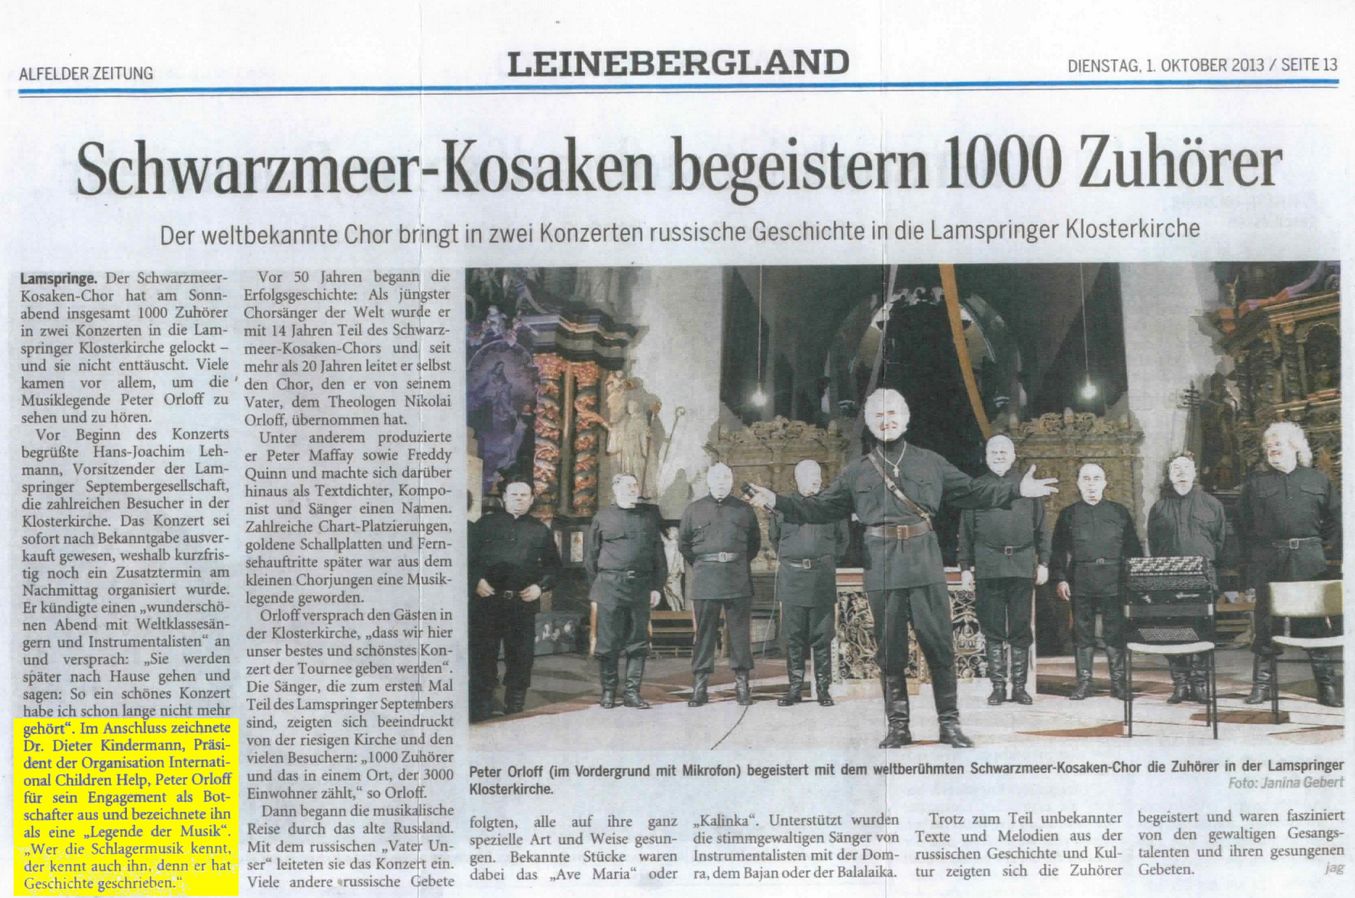 2013-11-05 Peter Orloff begeistert mit dem weltberühmten Schwarzmeer-Kosaken-Chor